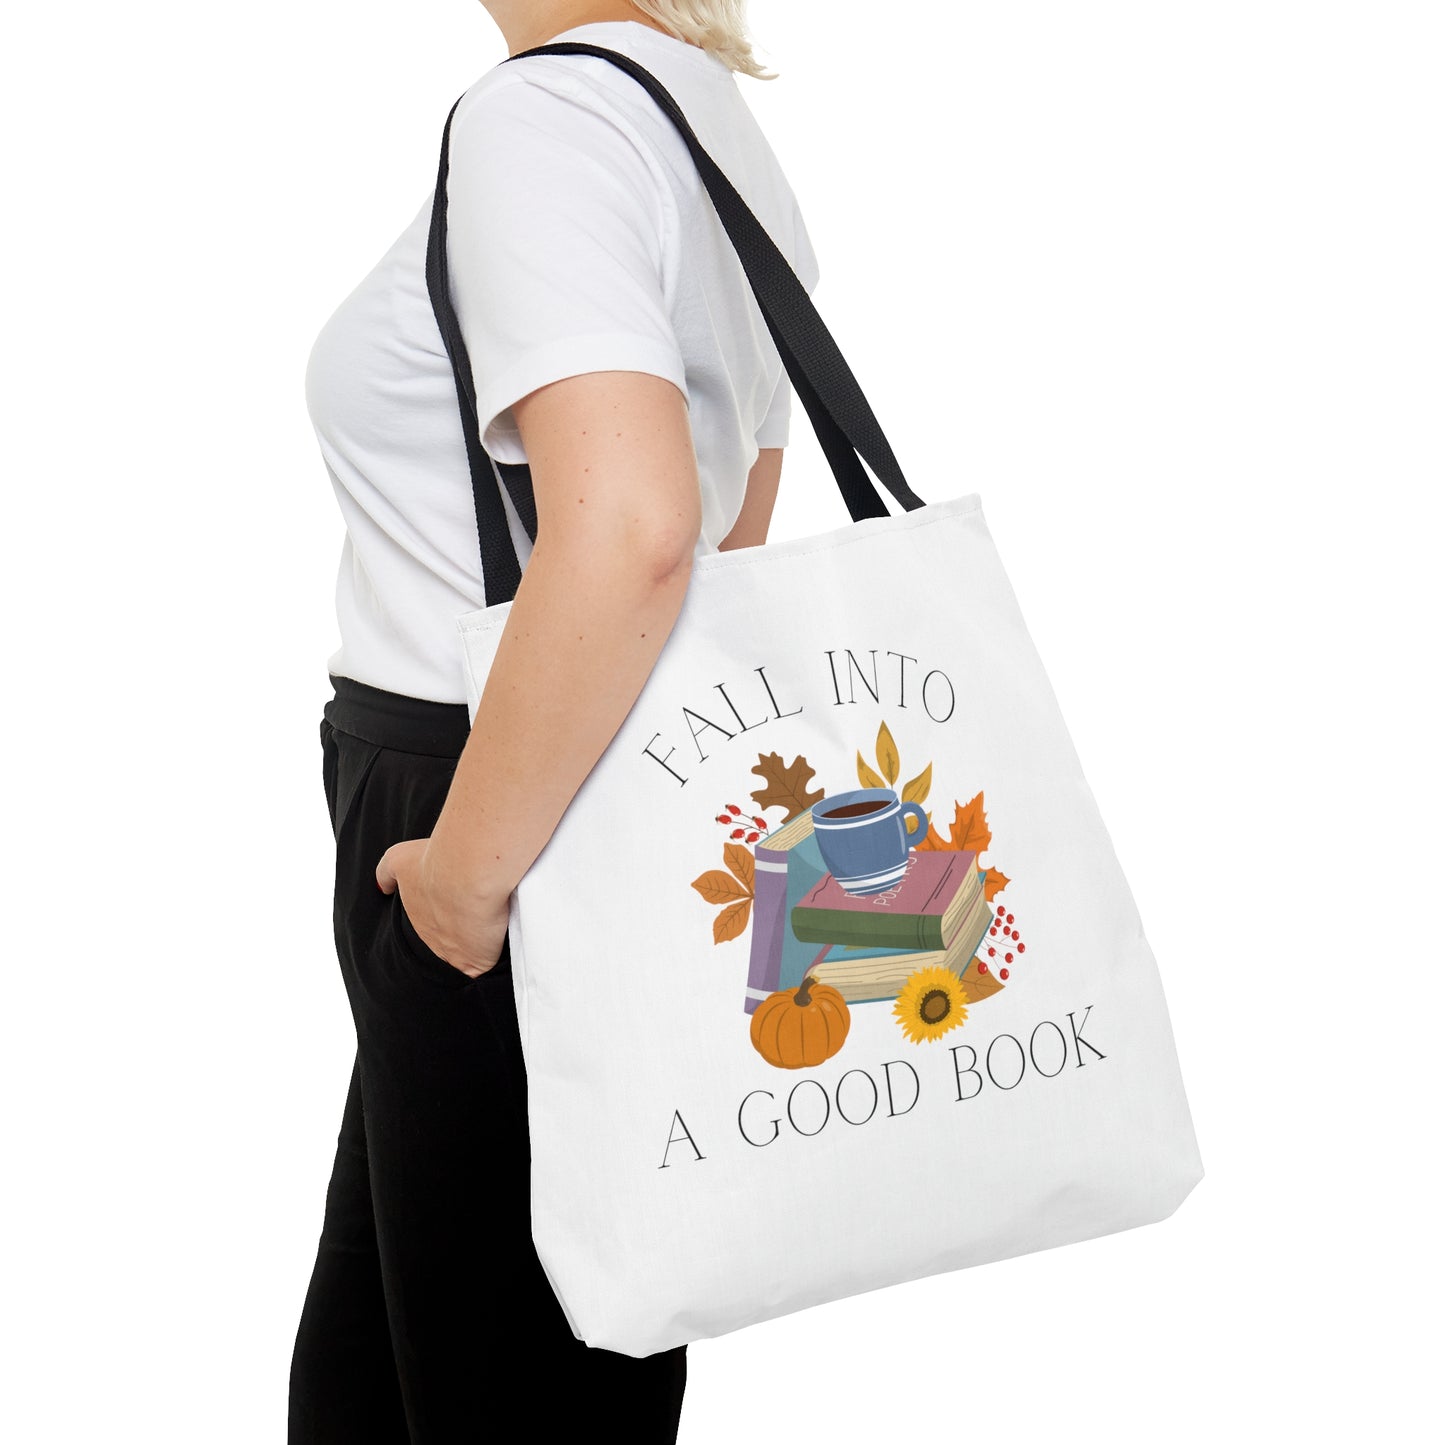 Fall Into A Good Book Tote Bag